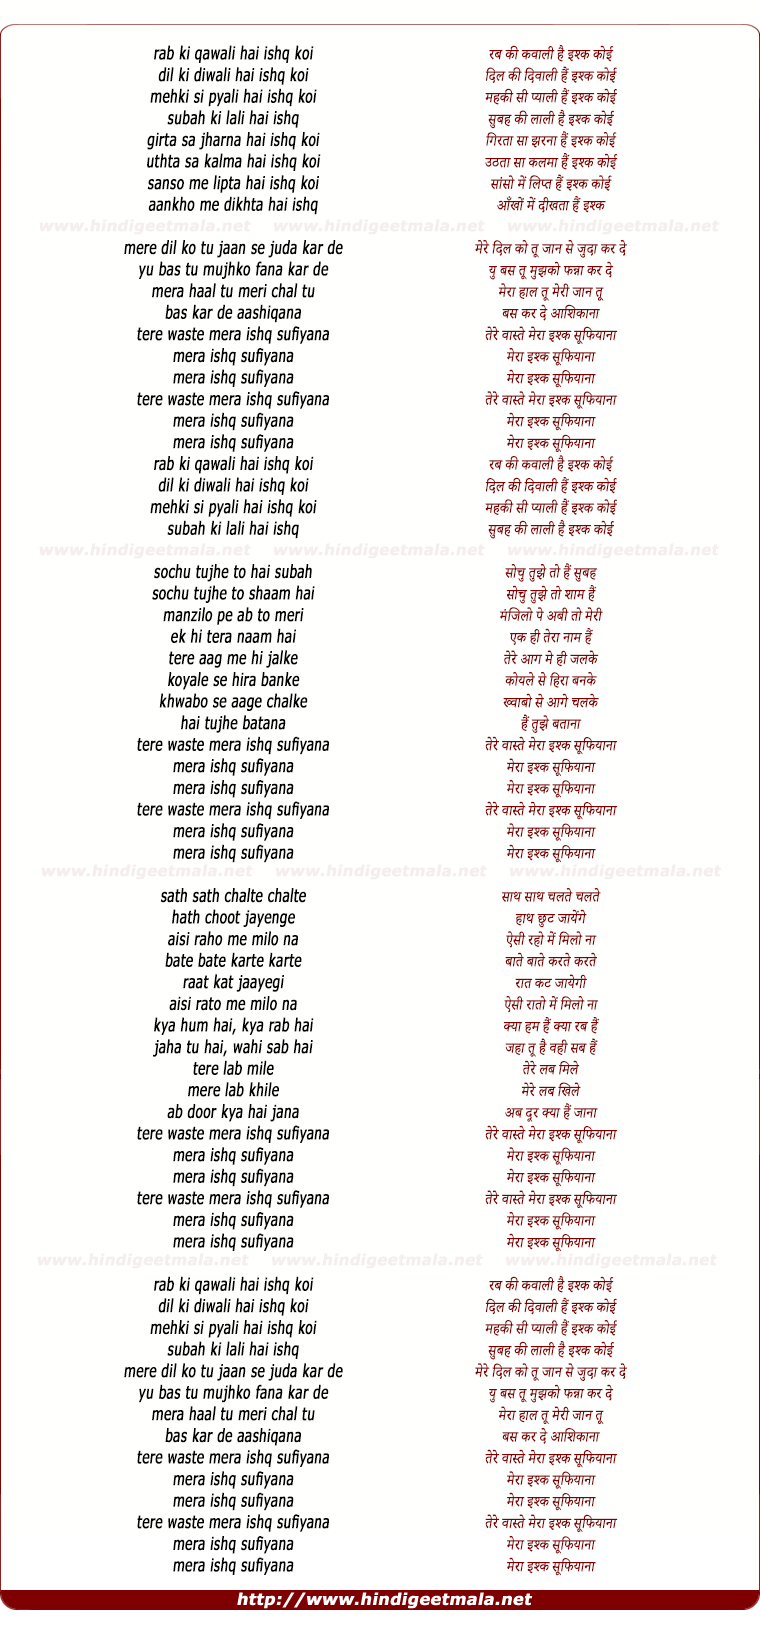 lyrics of song Tere Waste Mera Ishq Sufiyana Mera Ishq Sufiyana